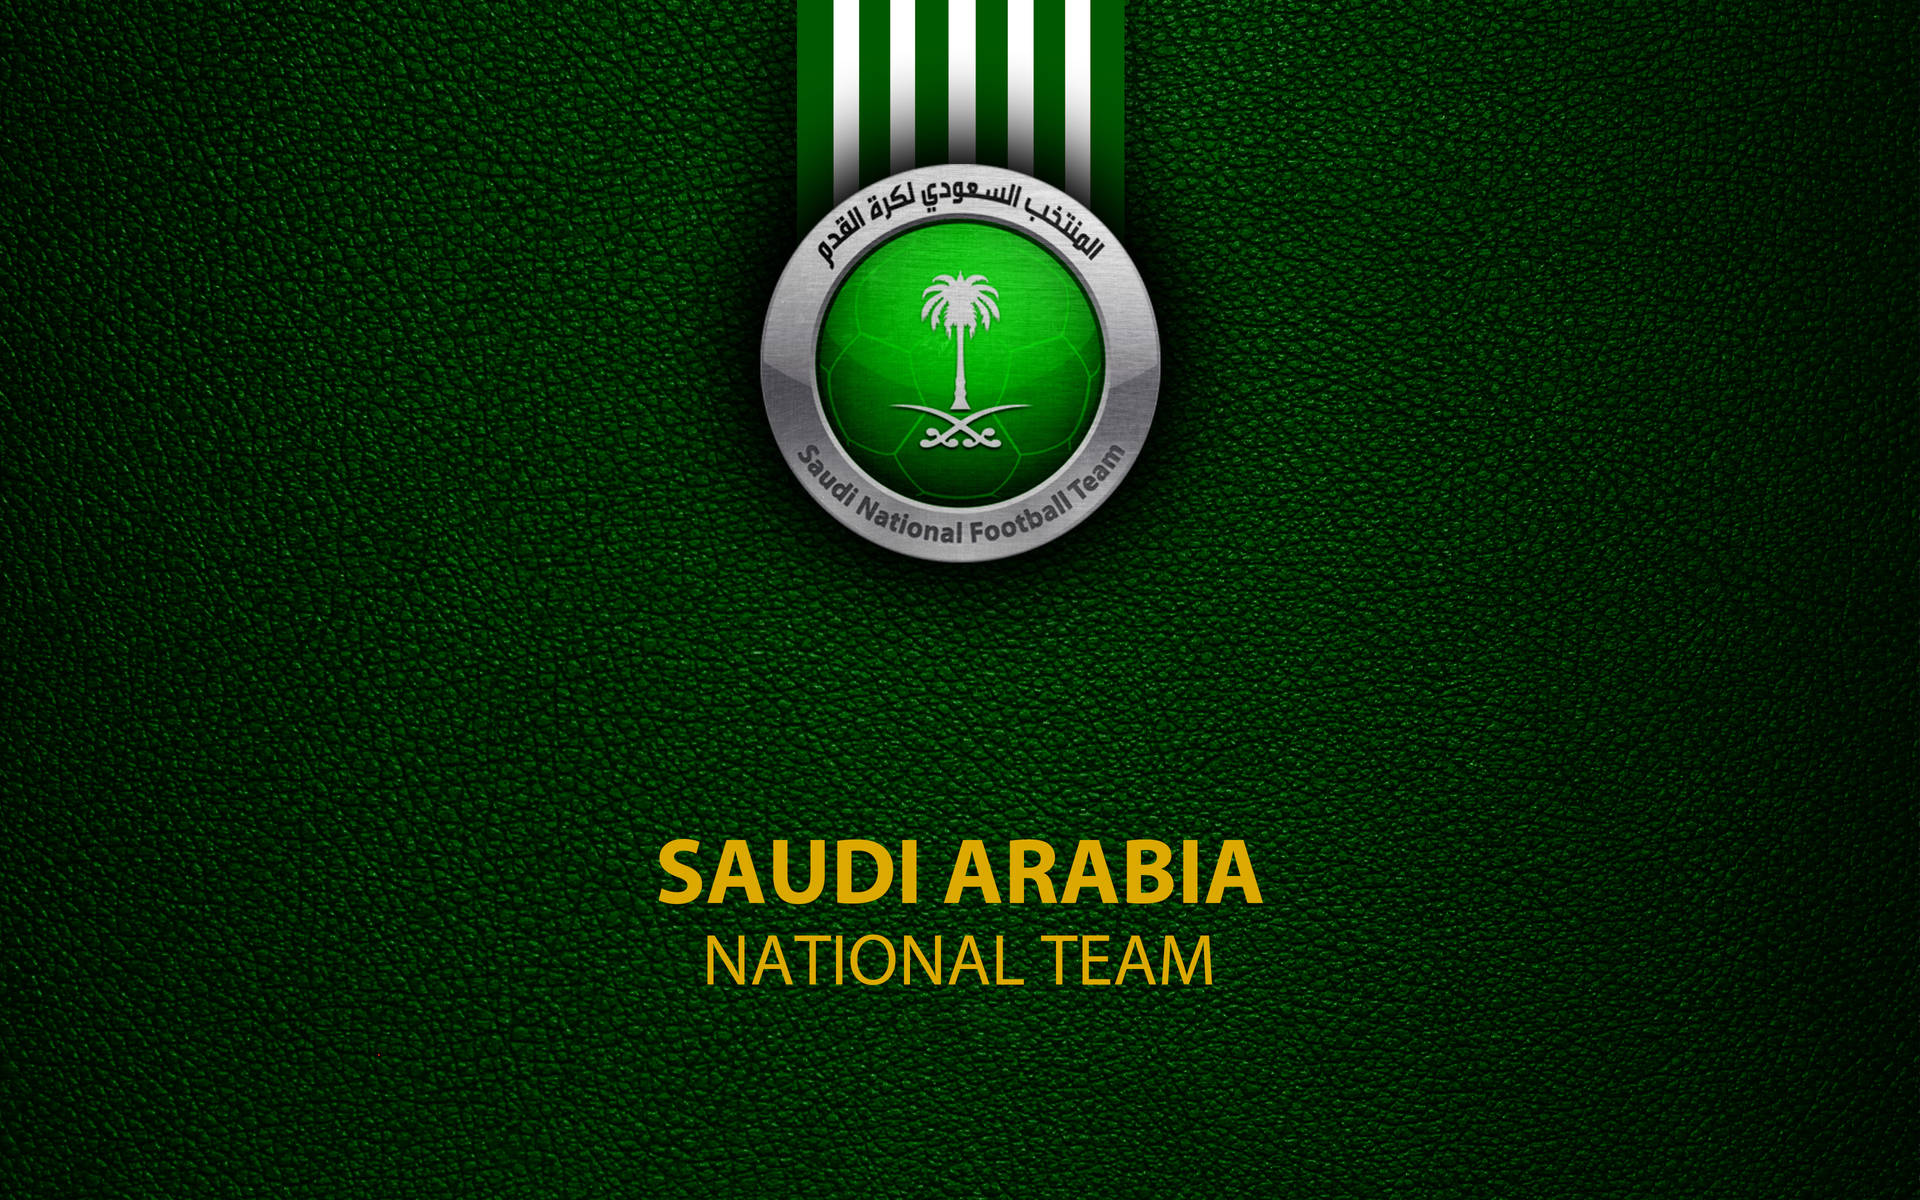 Saudi Arabia National Team Background